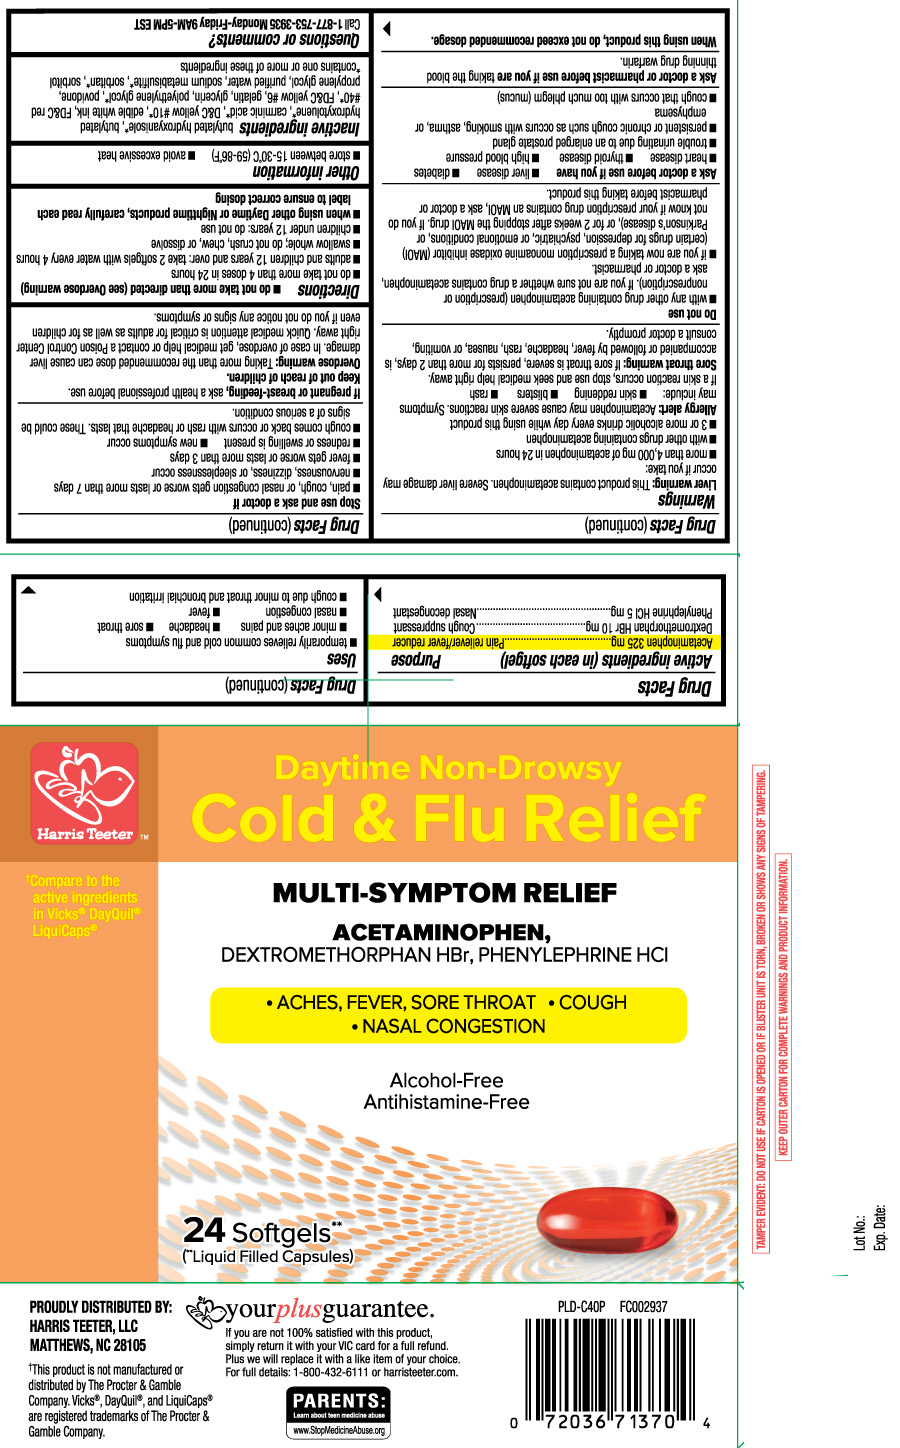 Acetaminophen 325 mg, Dextromethorphan HBr 10 mg, Phenylephrine HCI 5 mg